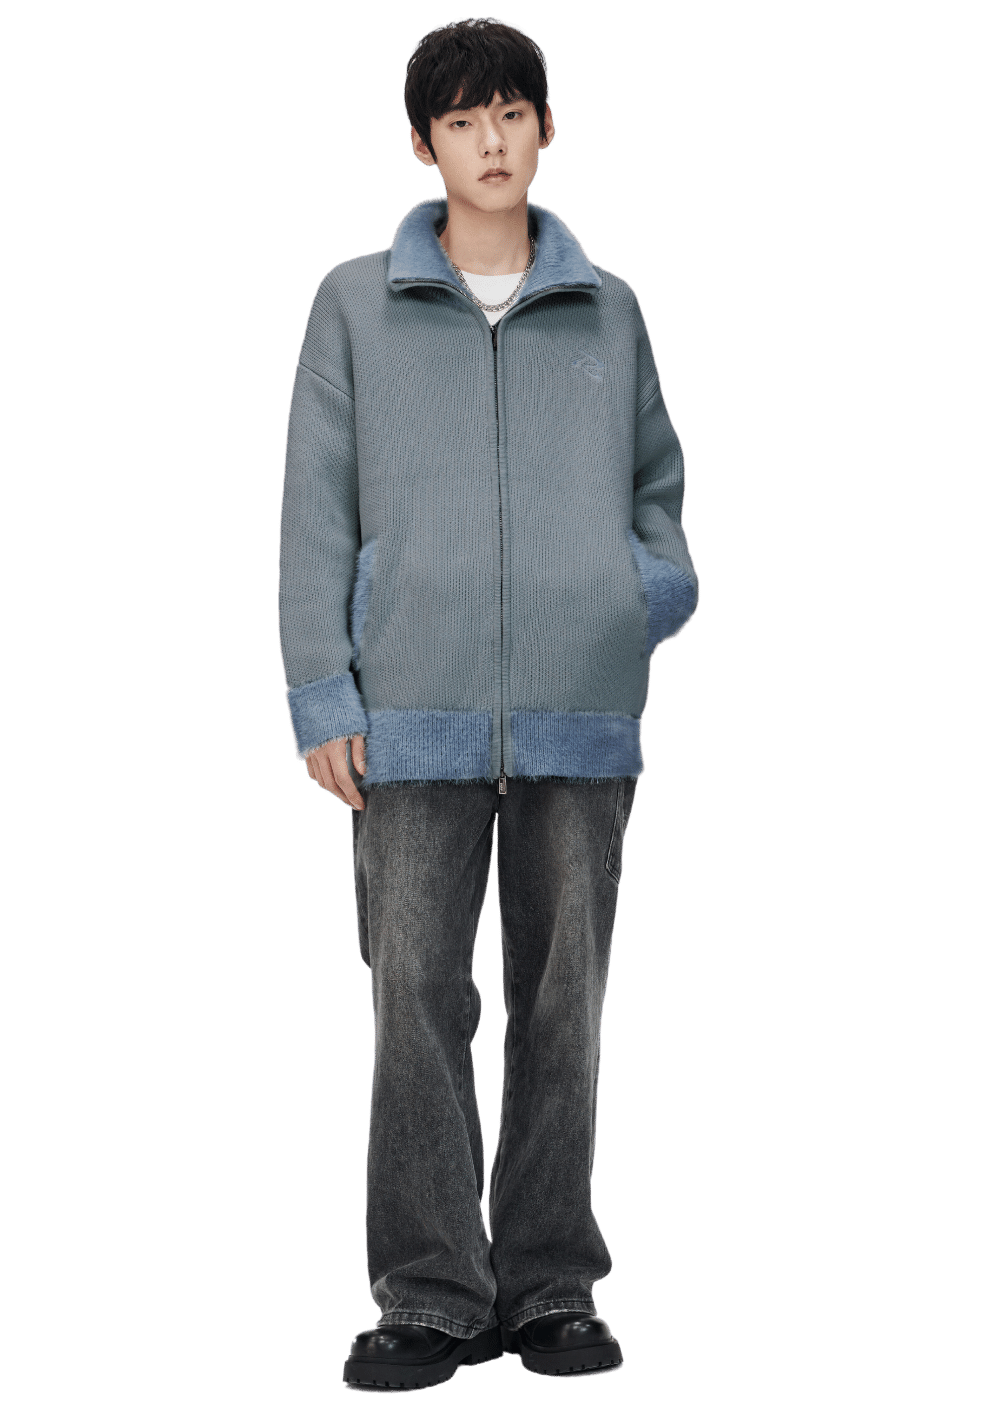 Cardigan Knitted Jacket - PSYLOS 1, Cardigan Knitted Jacket, Jacket, PCLP, PSYLOS 1